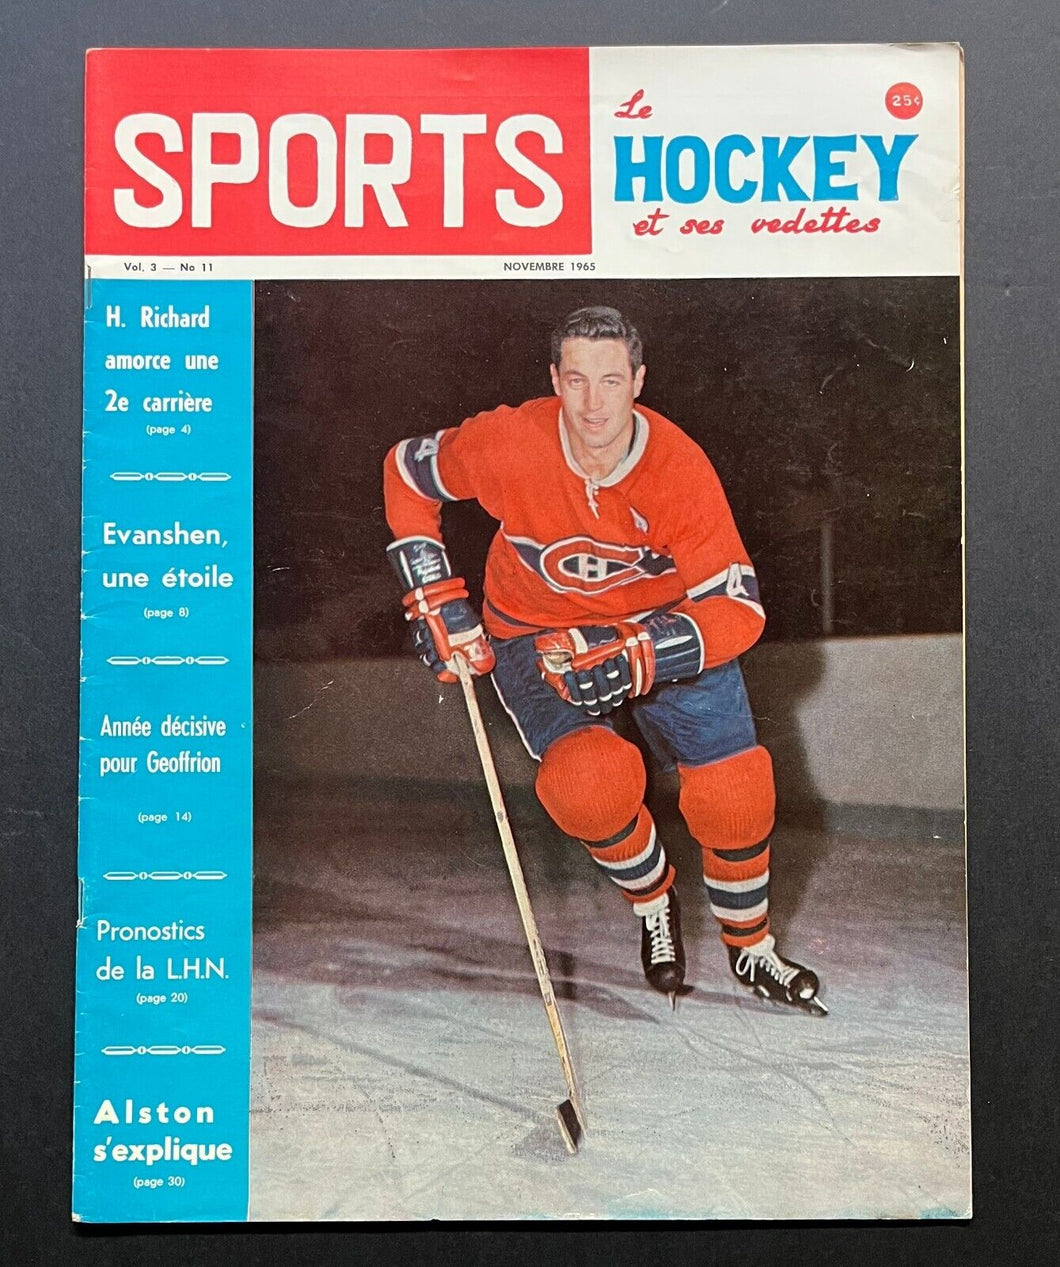 1965 Issue Quebec Magazine Sports Hockey NHL HOFer Jean Beliveau Cover